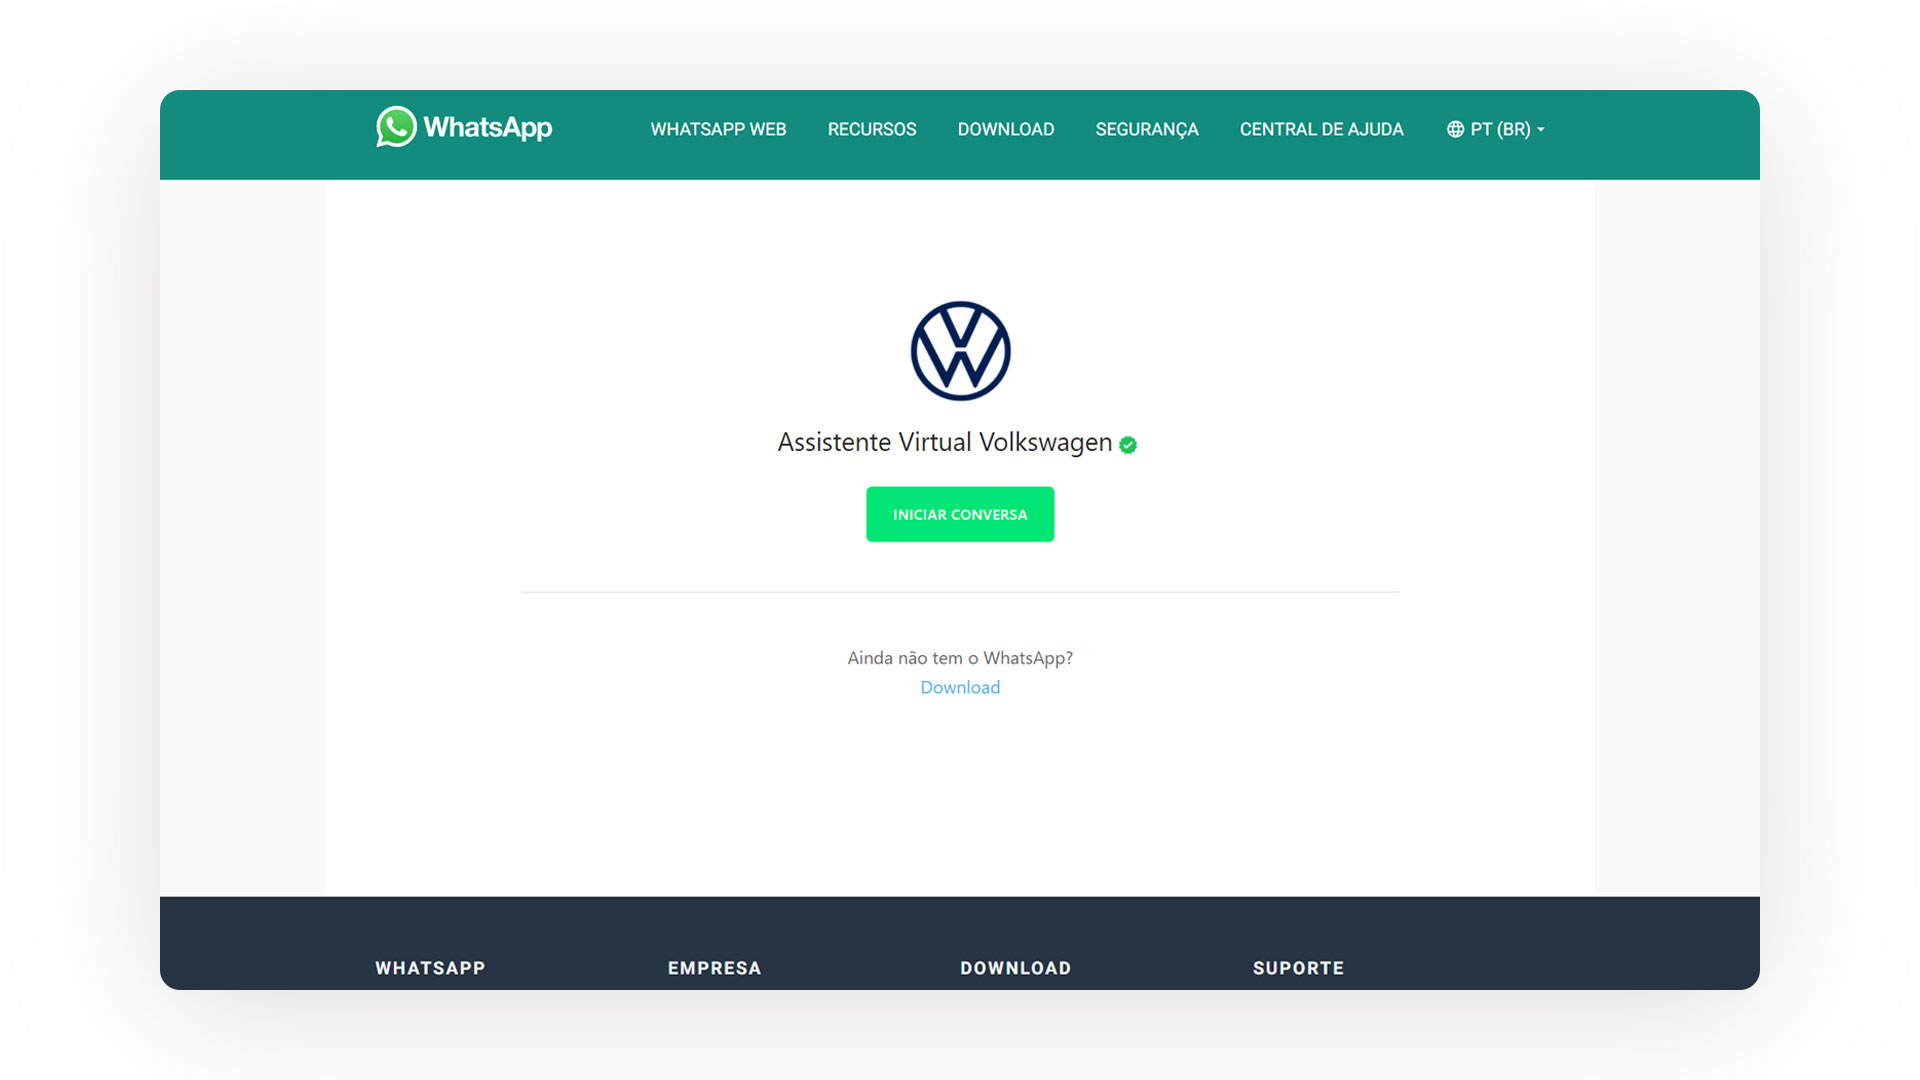 Página do chatbot da Volkswagen representa futuro do varejo